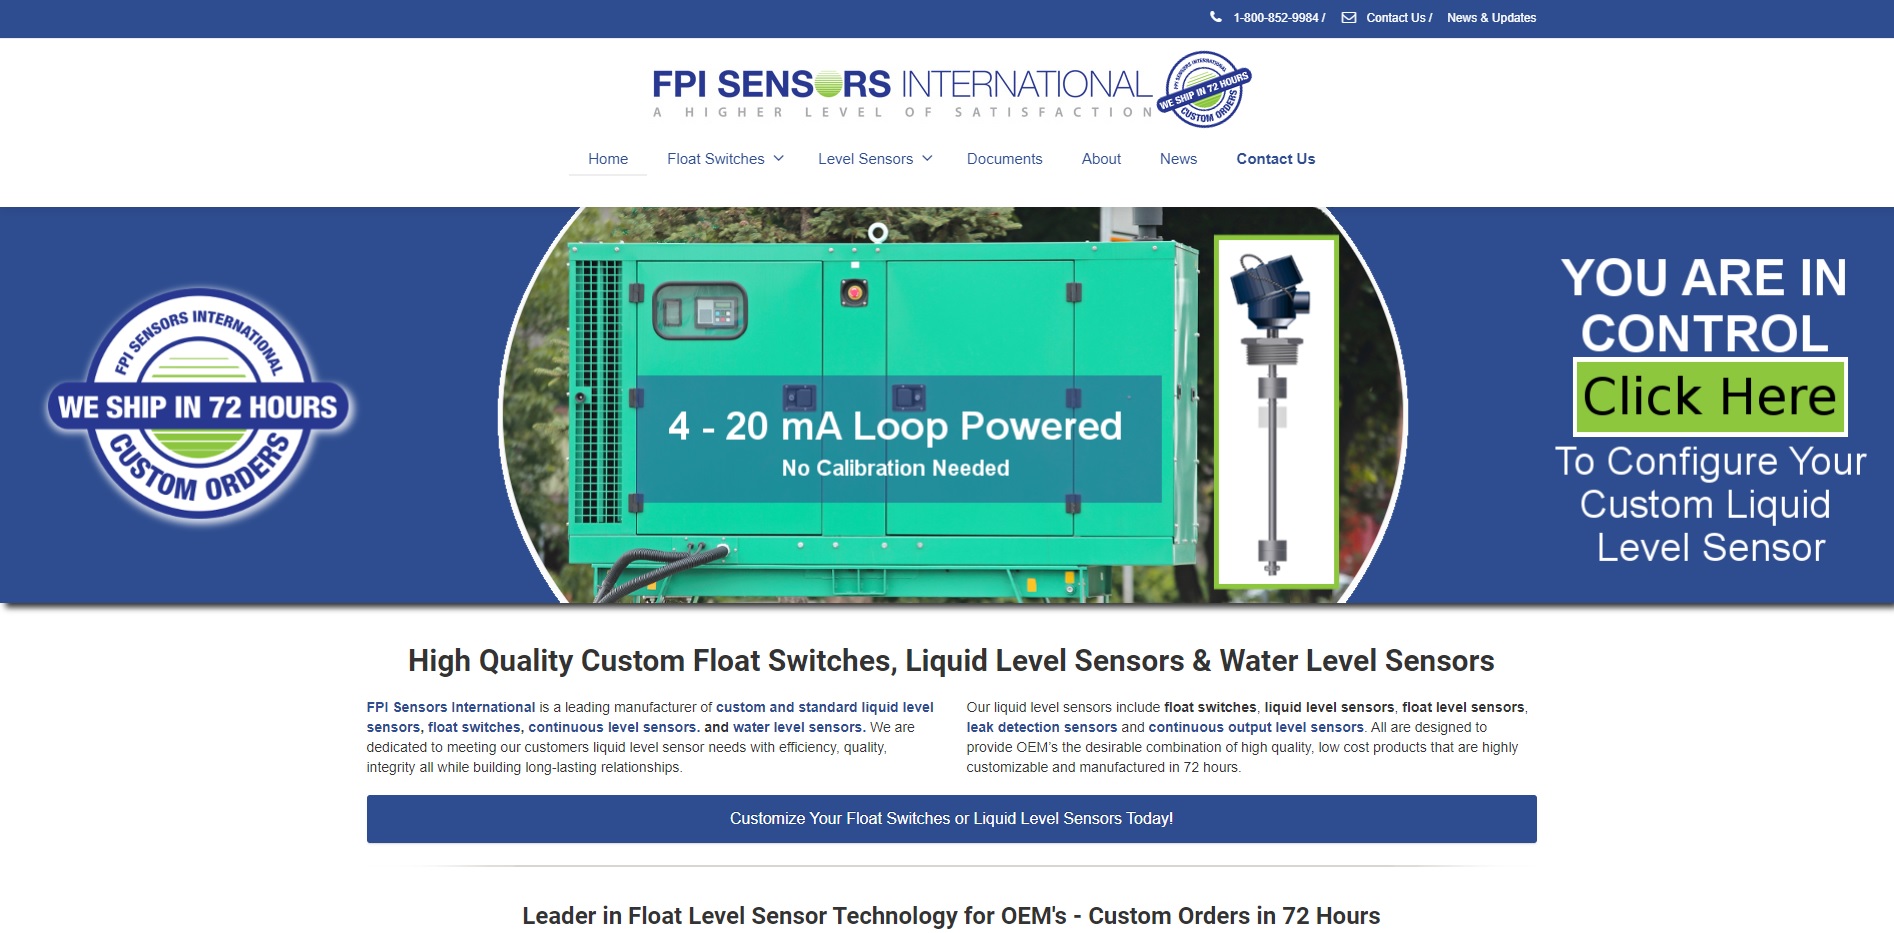 FPI Sensors International